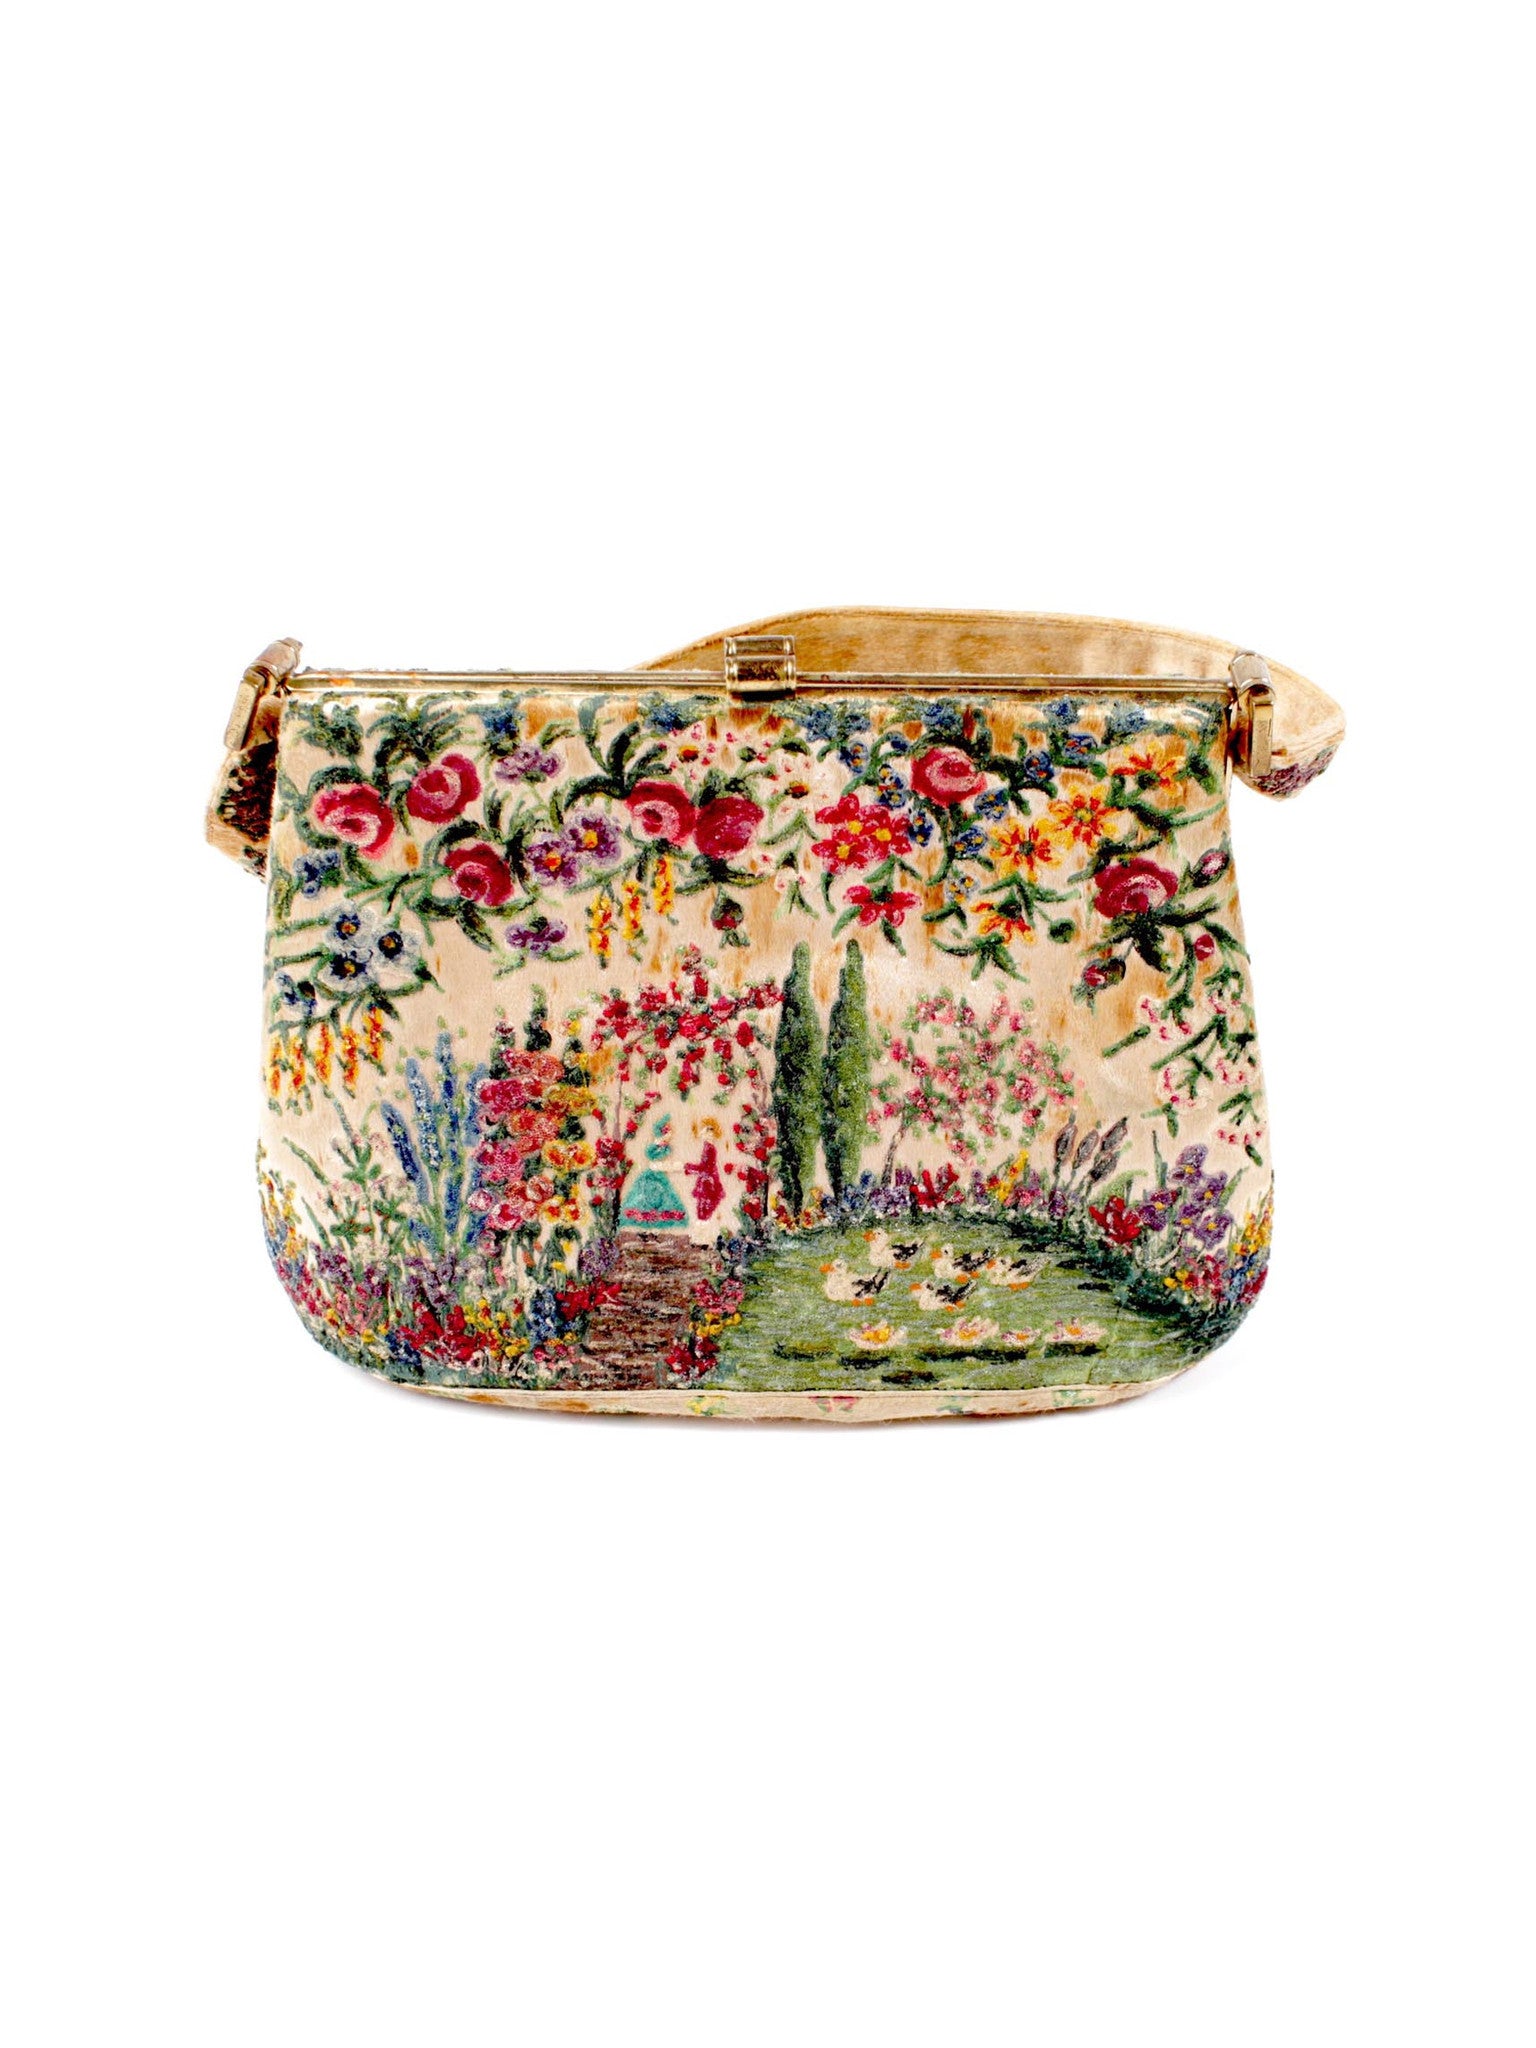 Philadelphia Museum of Art - Collections Object : Woman's Handbag | Vintage  bags 1950s, Bags, Handbag